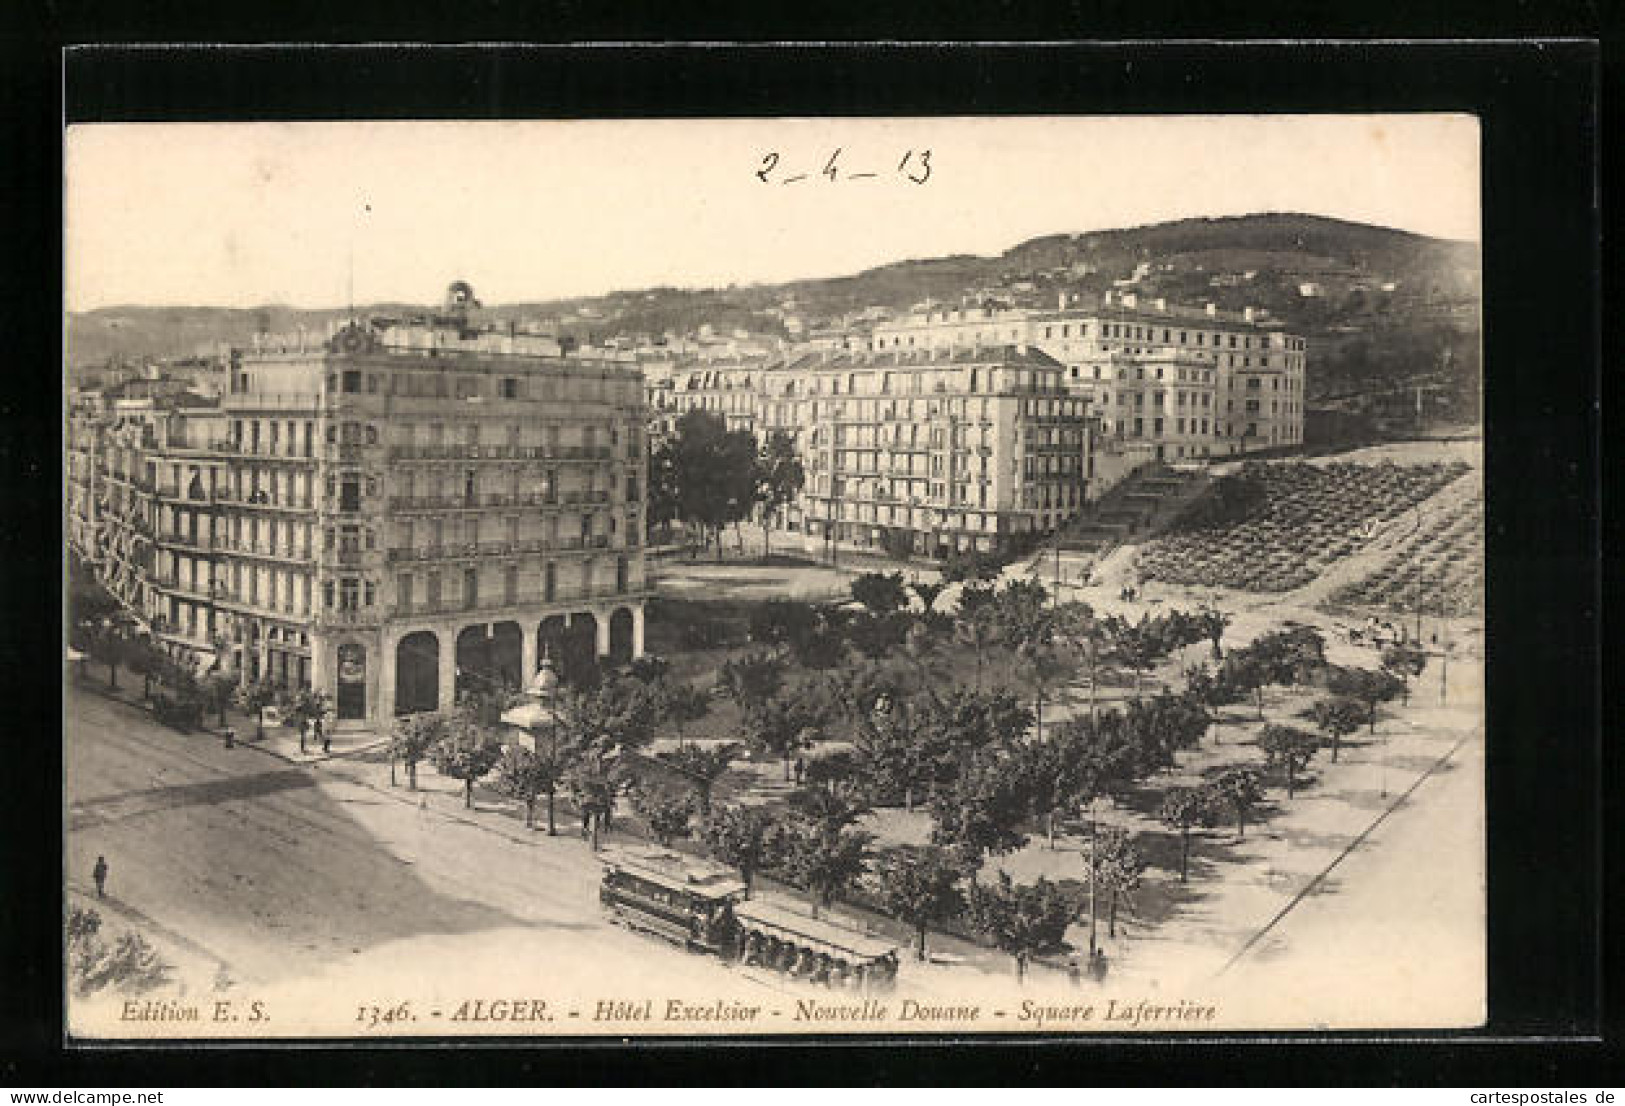 AK Alger, Hotel Excelsior, Nouville Douane, Square Laferriere, Strassenbahn  - Tram